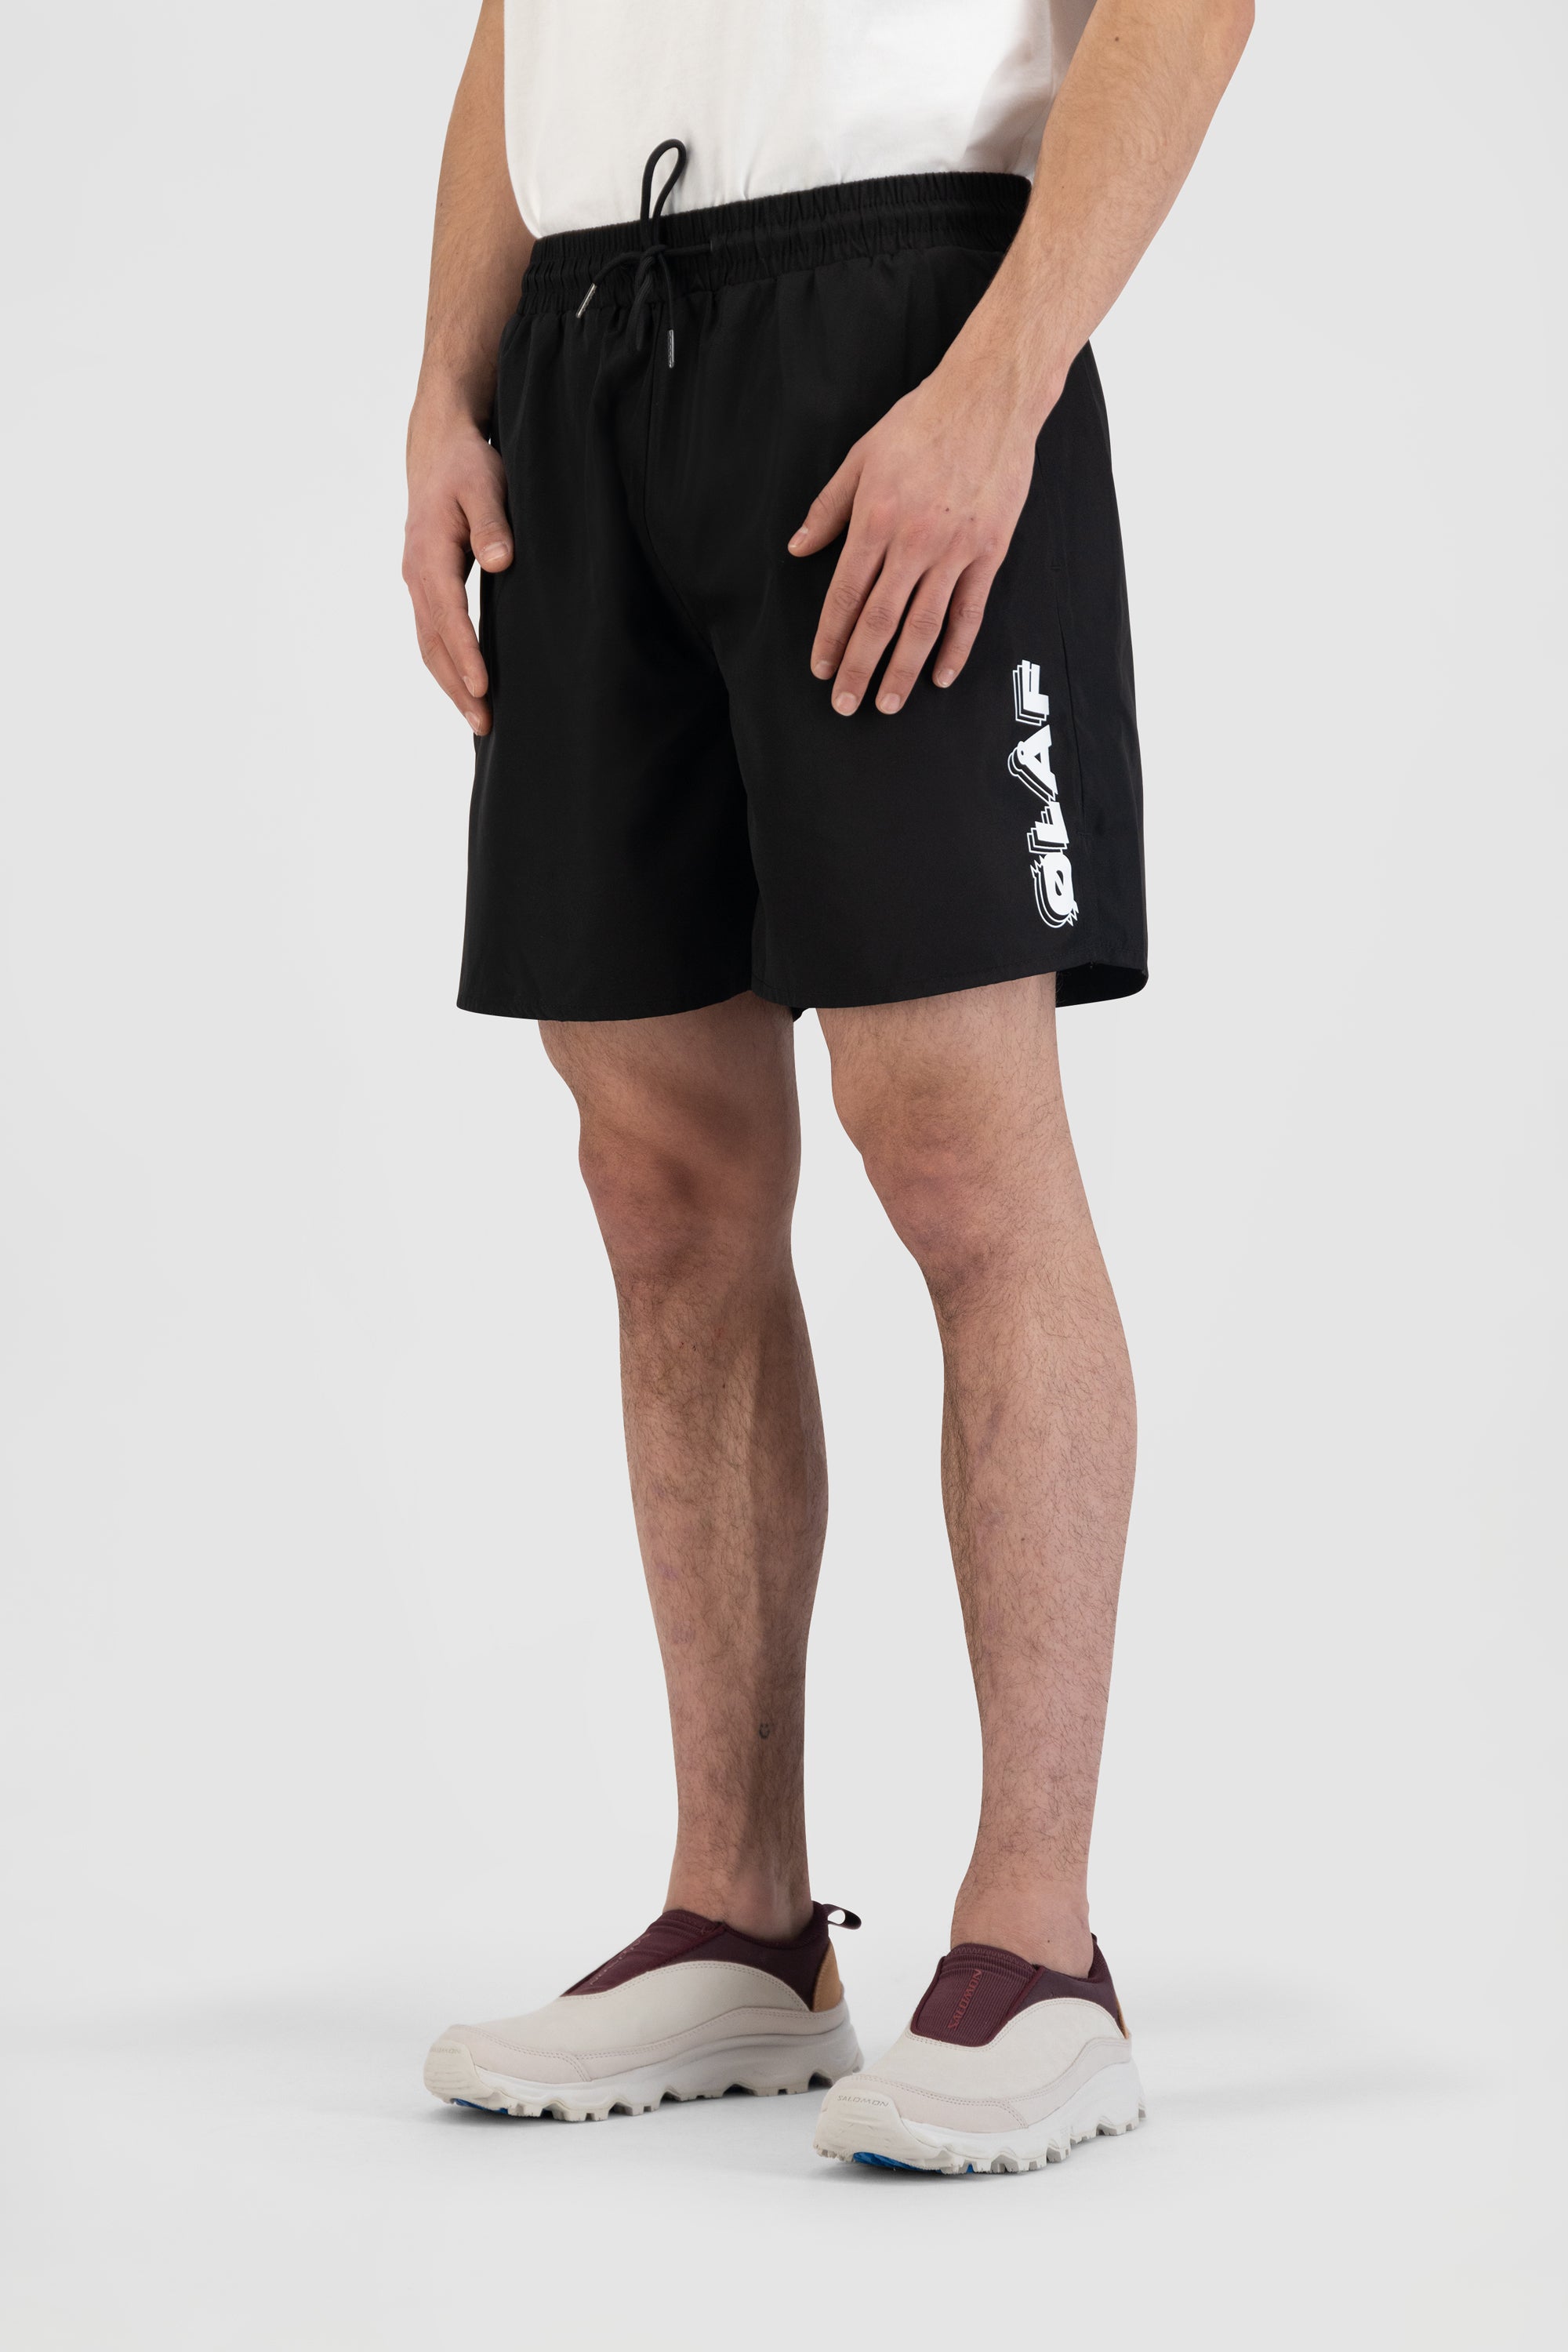 ØLÅF Swim Shorts - Black